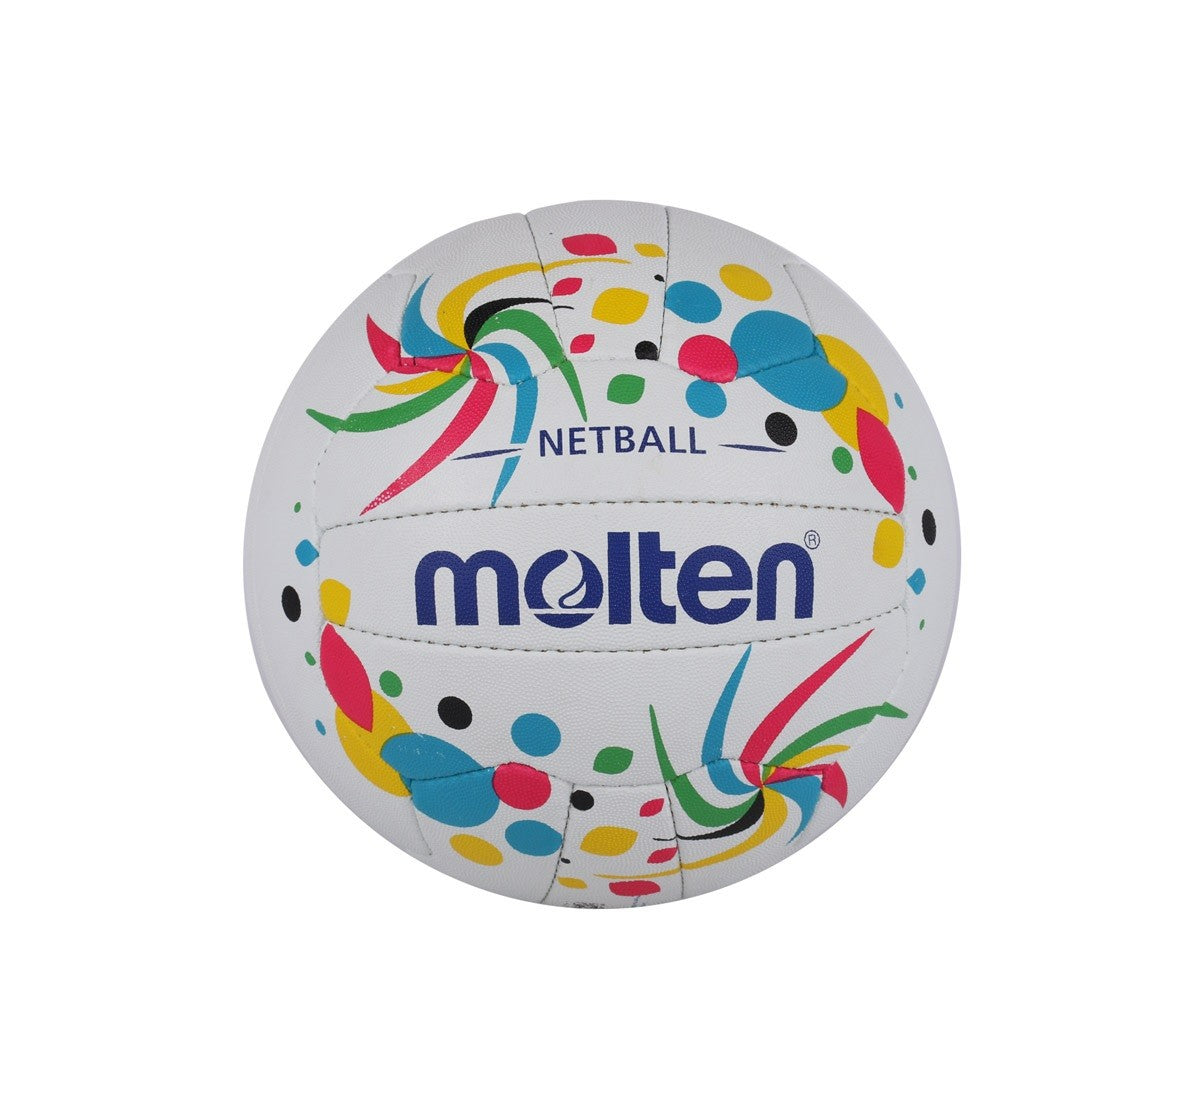 Molten Netball Club/Match Level Multi-Colour